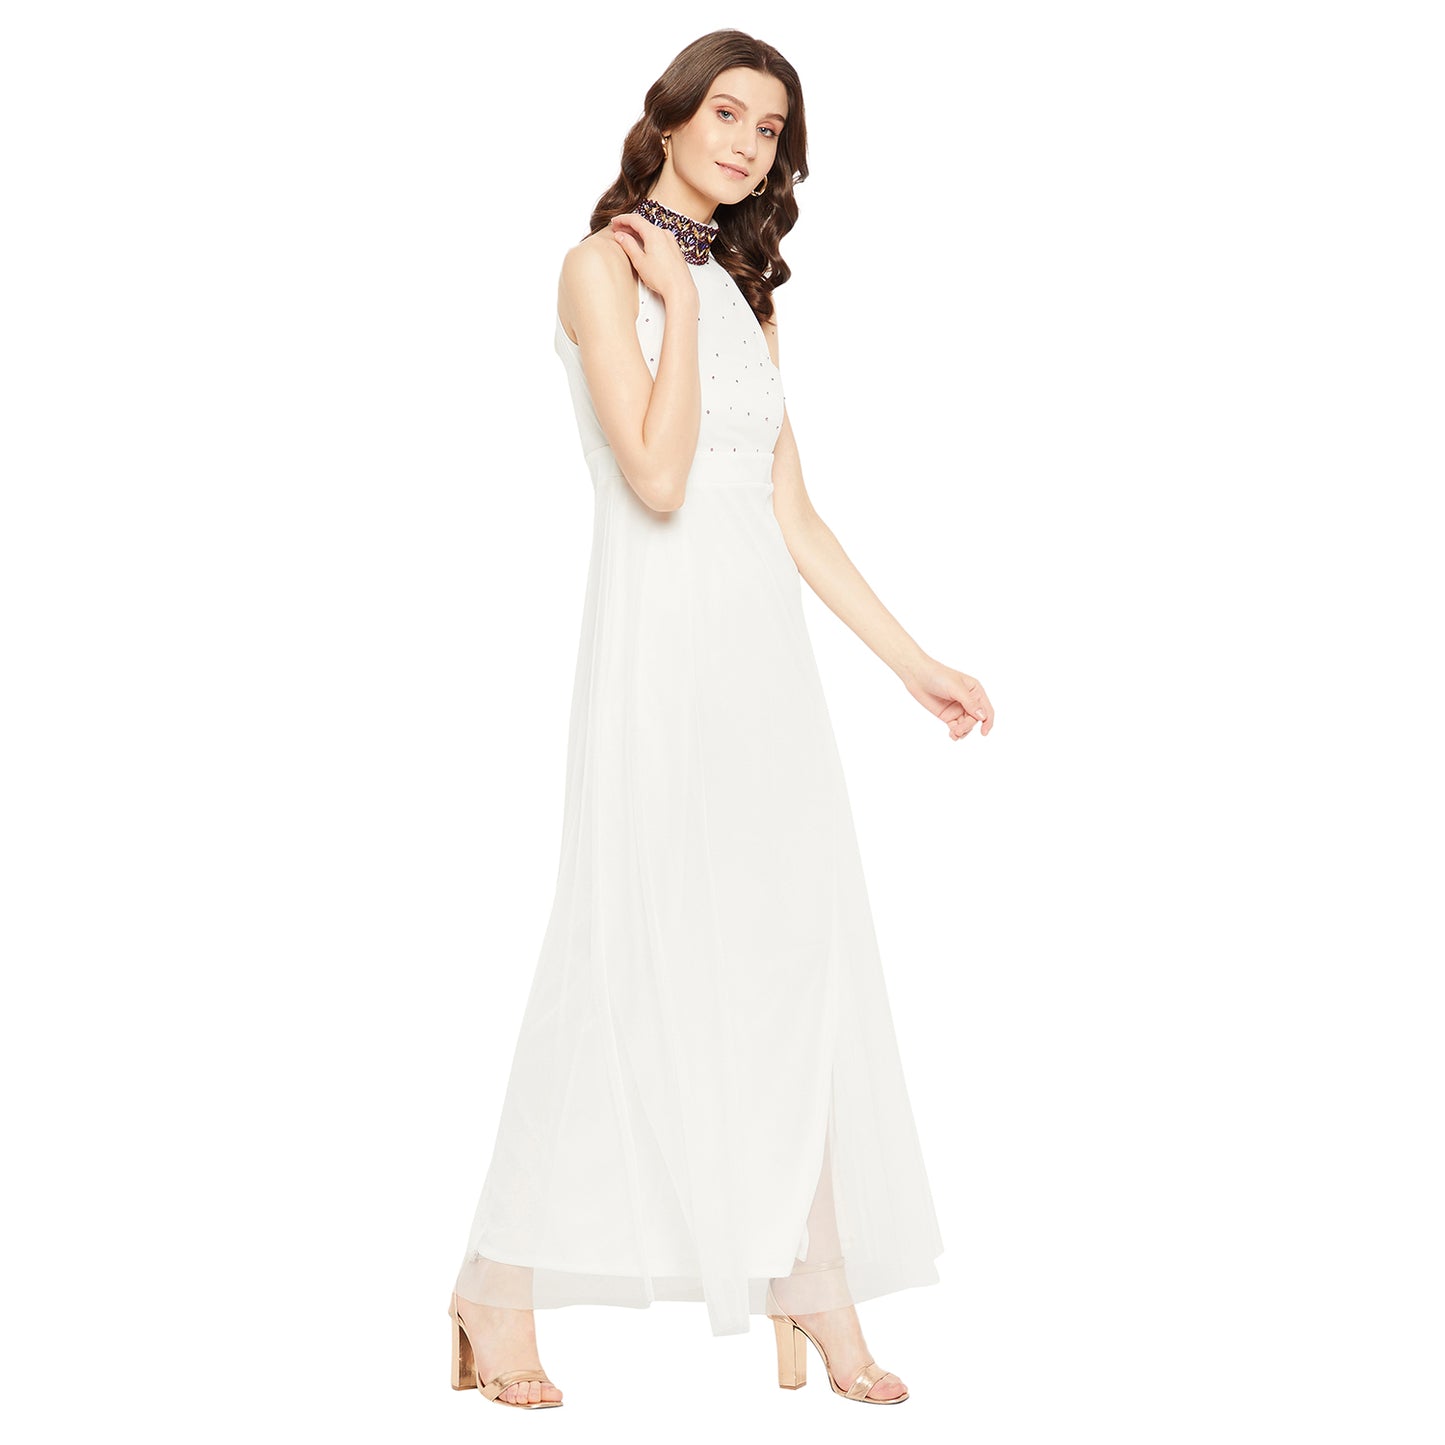 LY2 Embellished Cream long Dress with Side slit